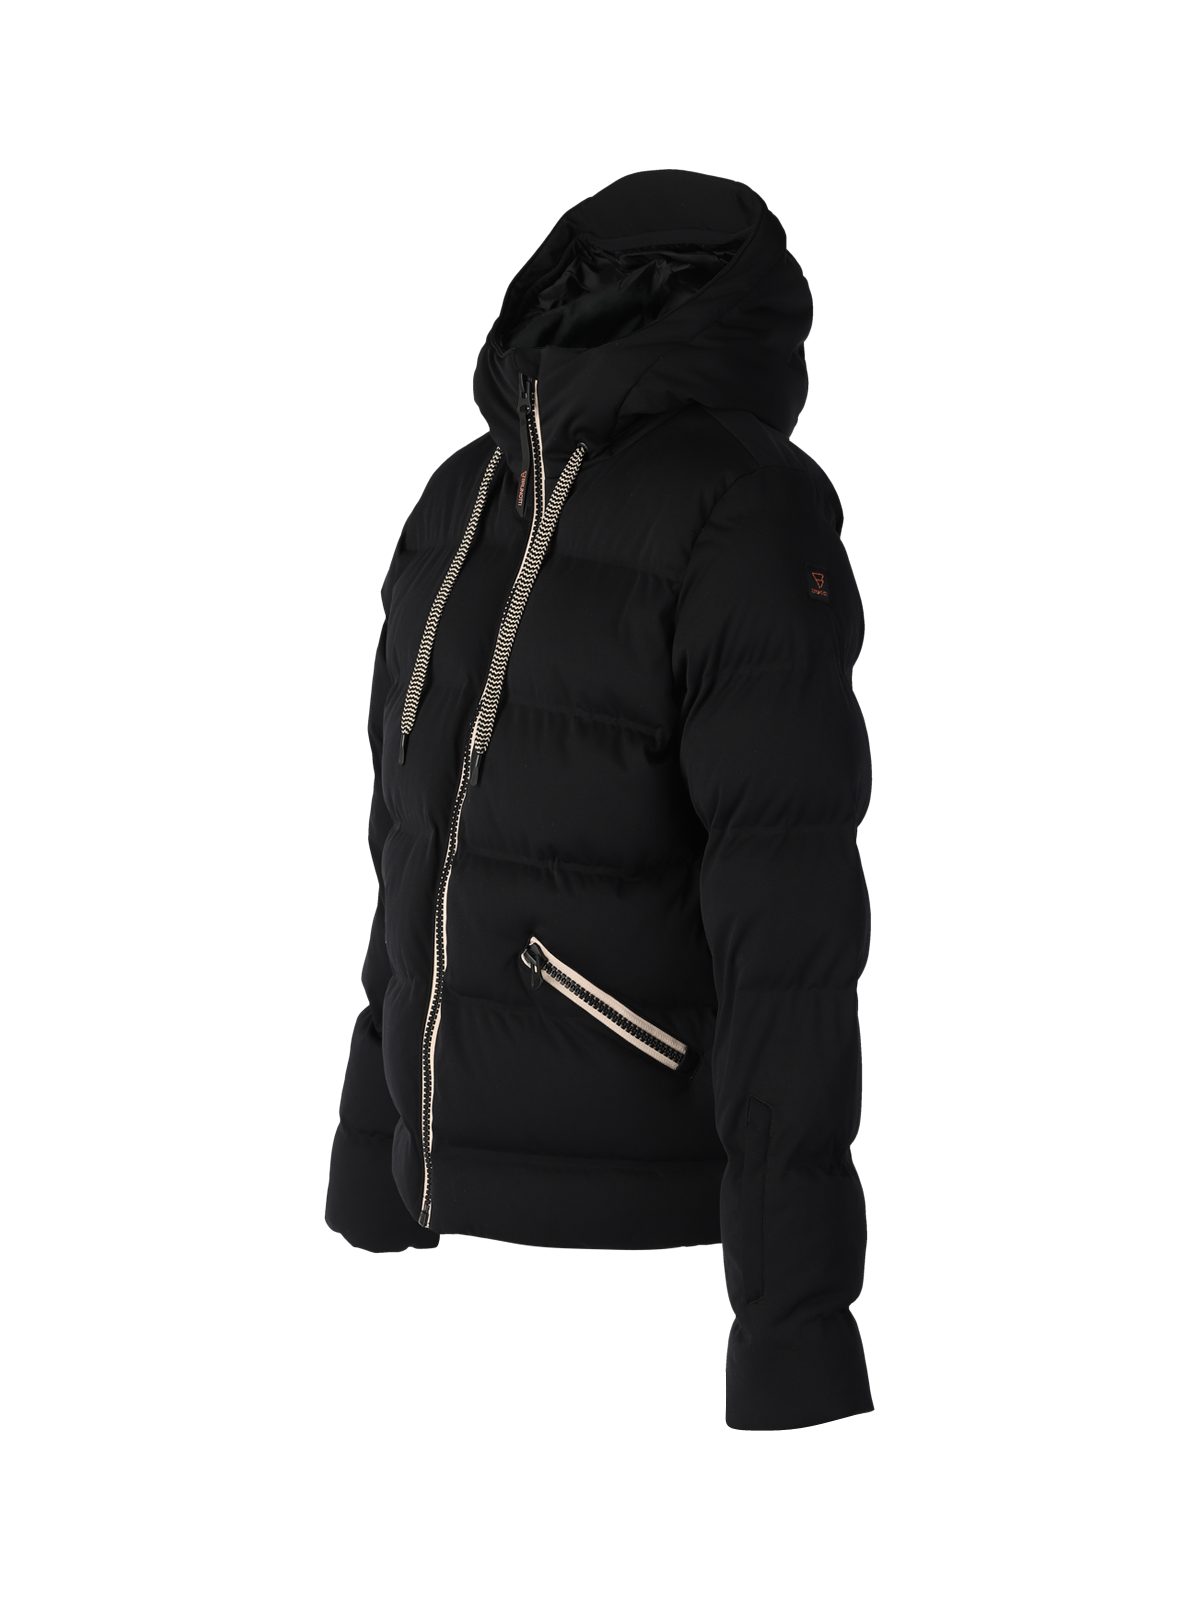 Schneejacke Snow Irai Women Brunotti Black Jacket